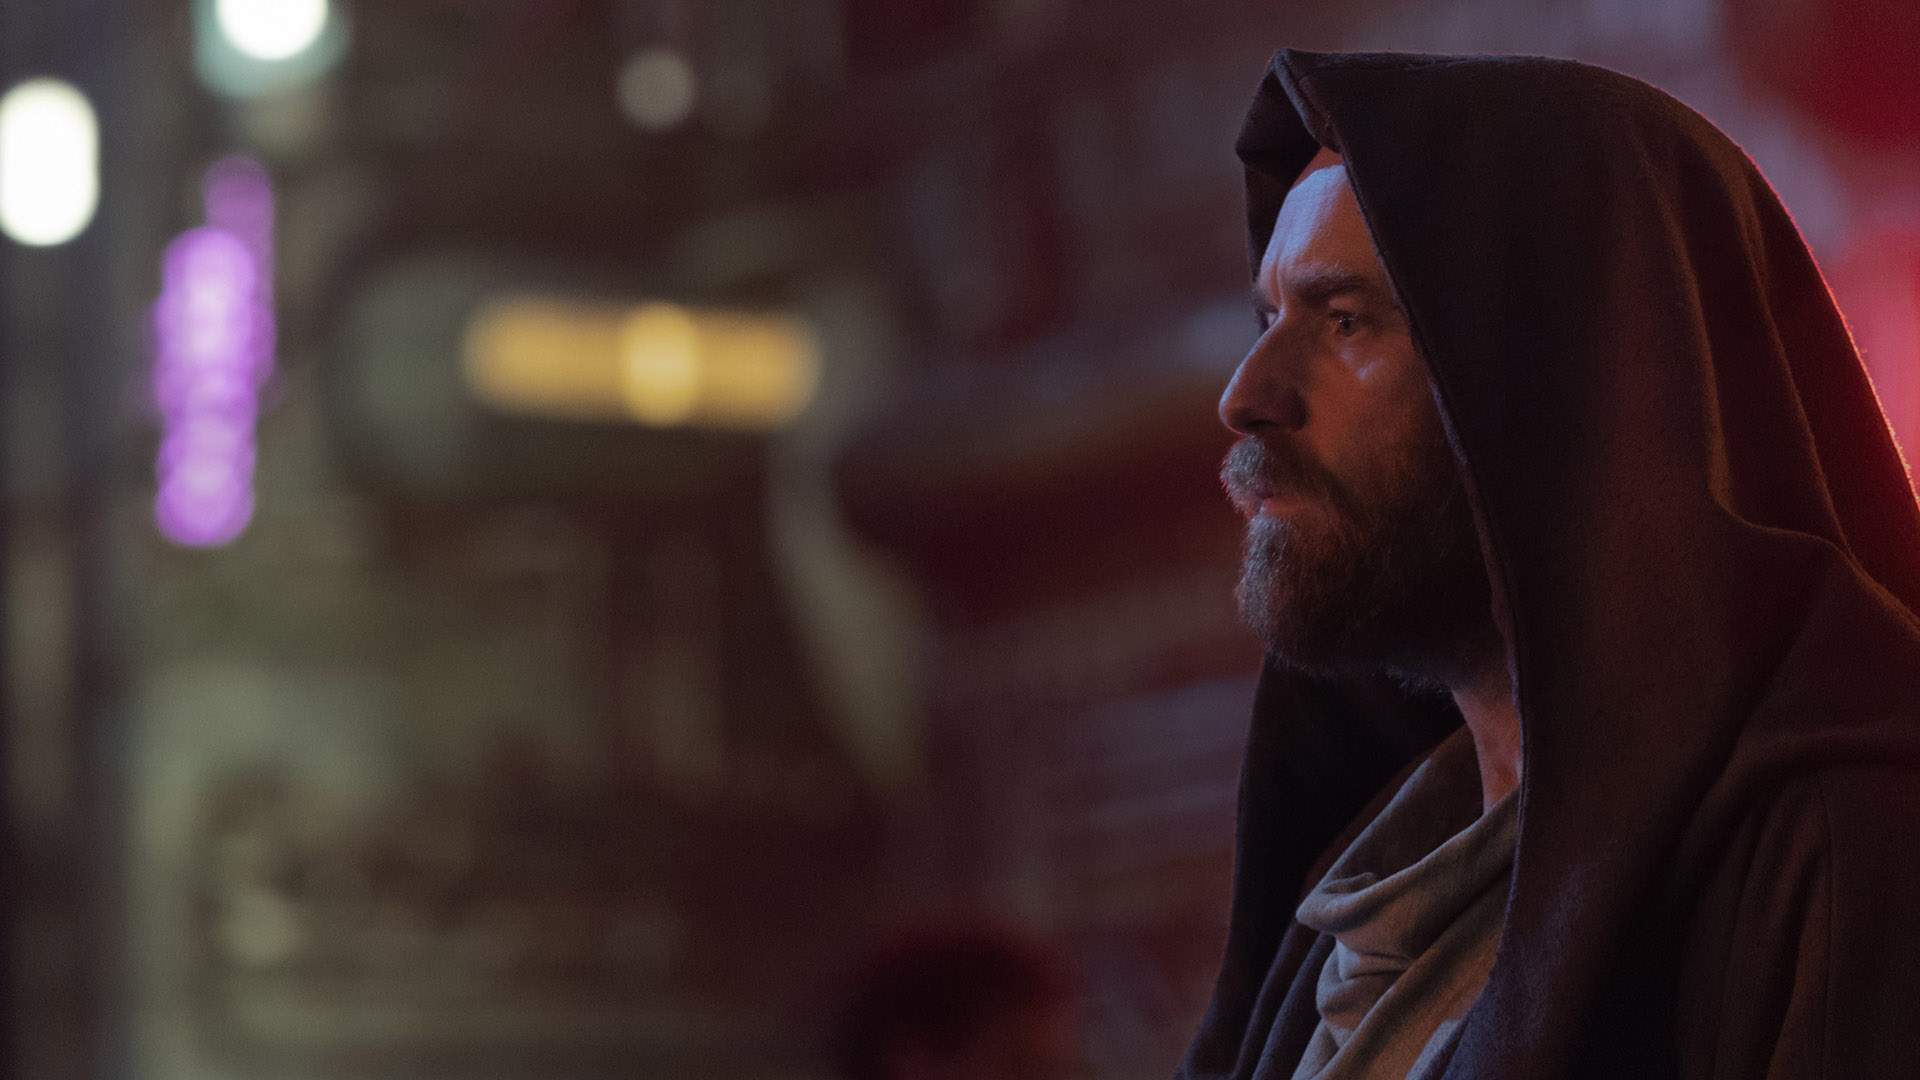 The Full Trailer for Disney+'s New 'Obi-Wan Kenobi' Series Pits the Jedi Master Against Darth Vader